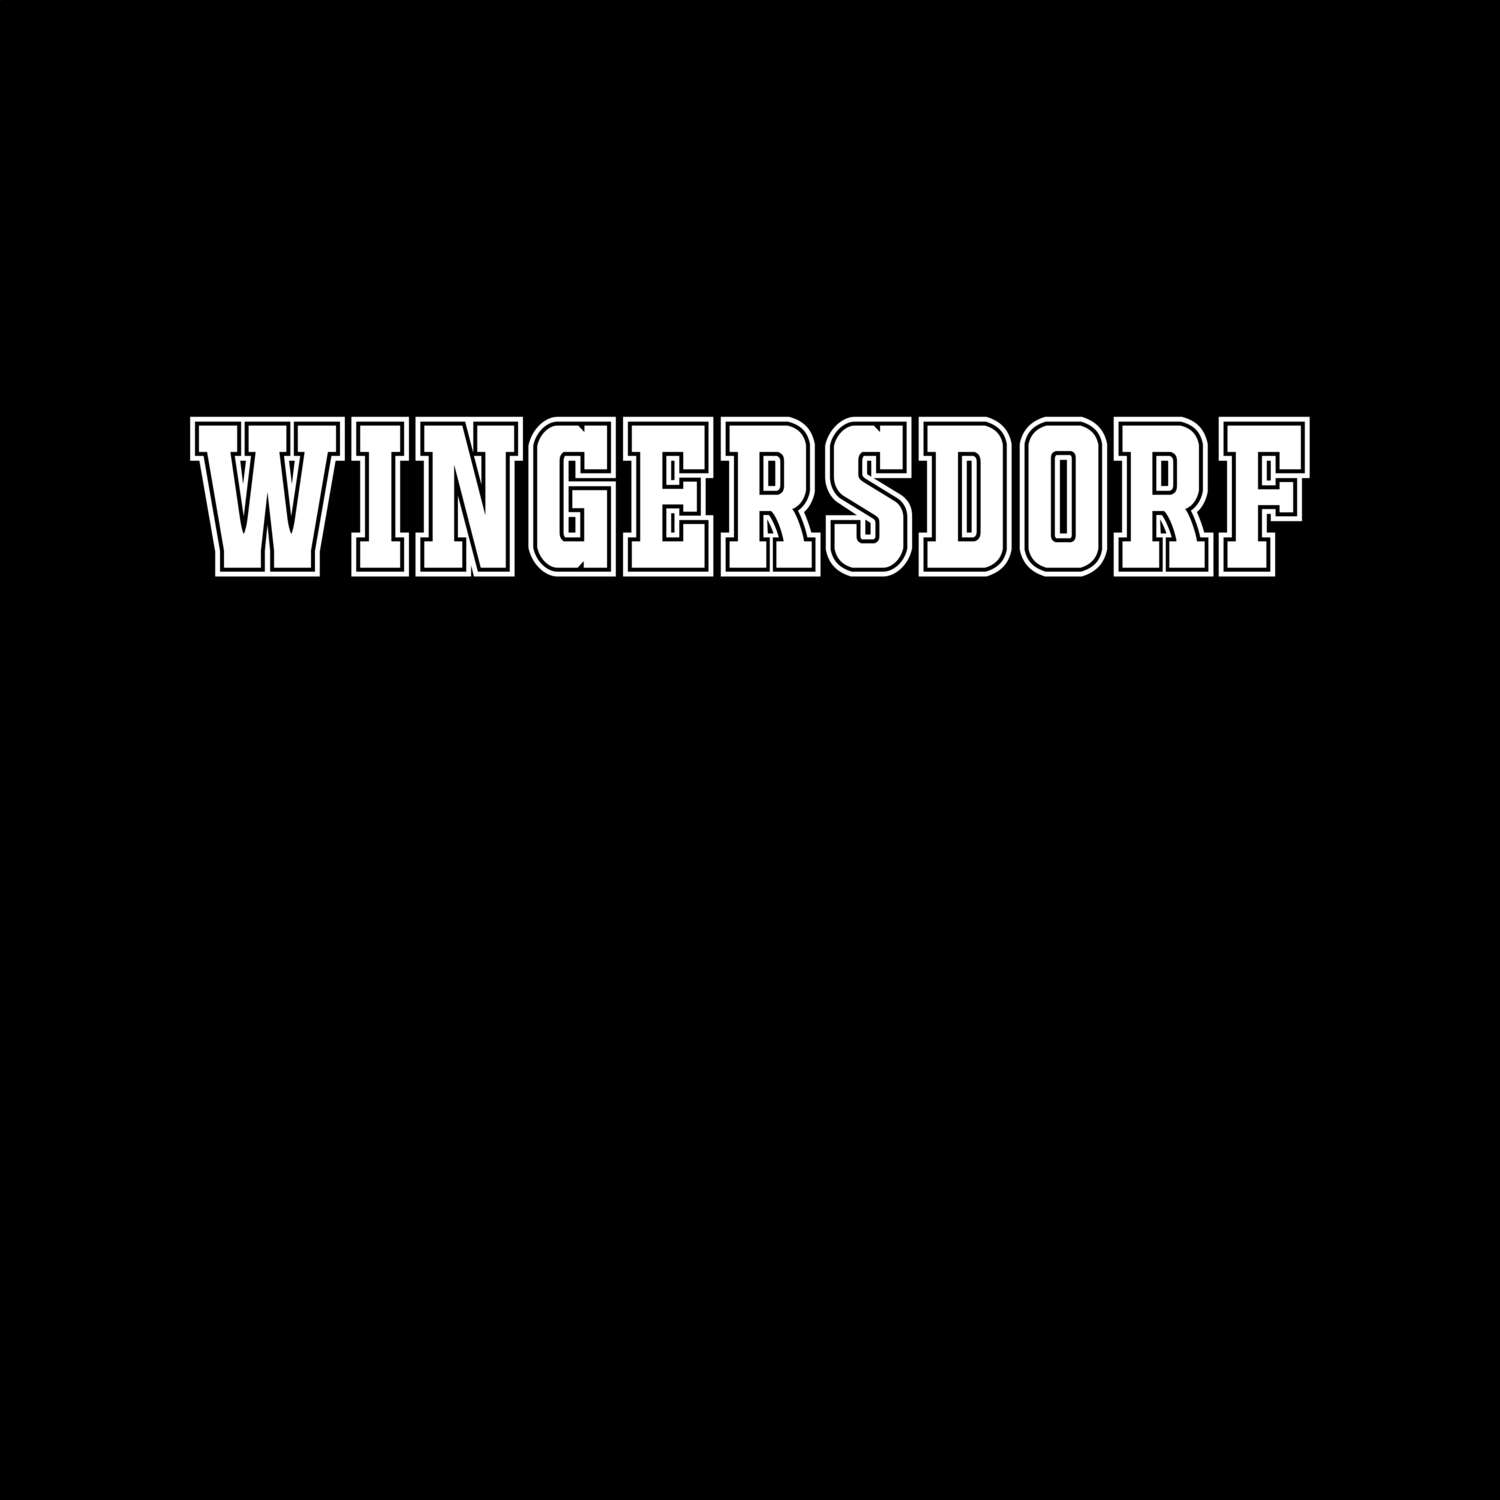 Wingersdorf T-Shirt »Classic«